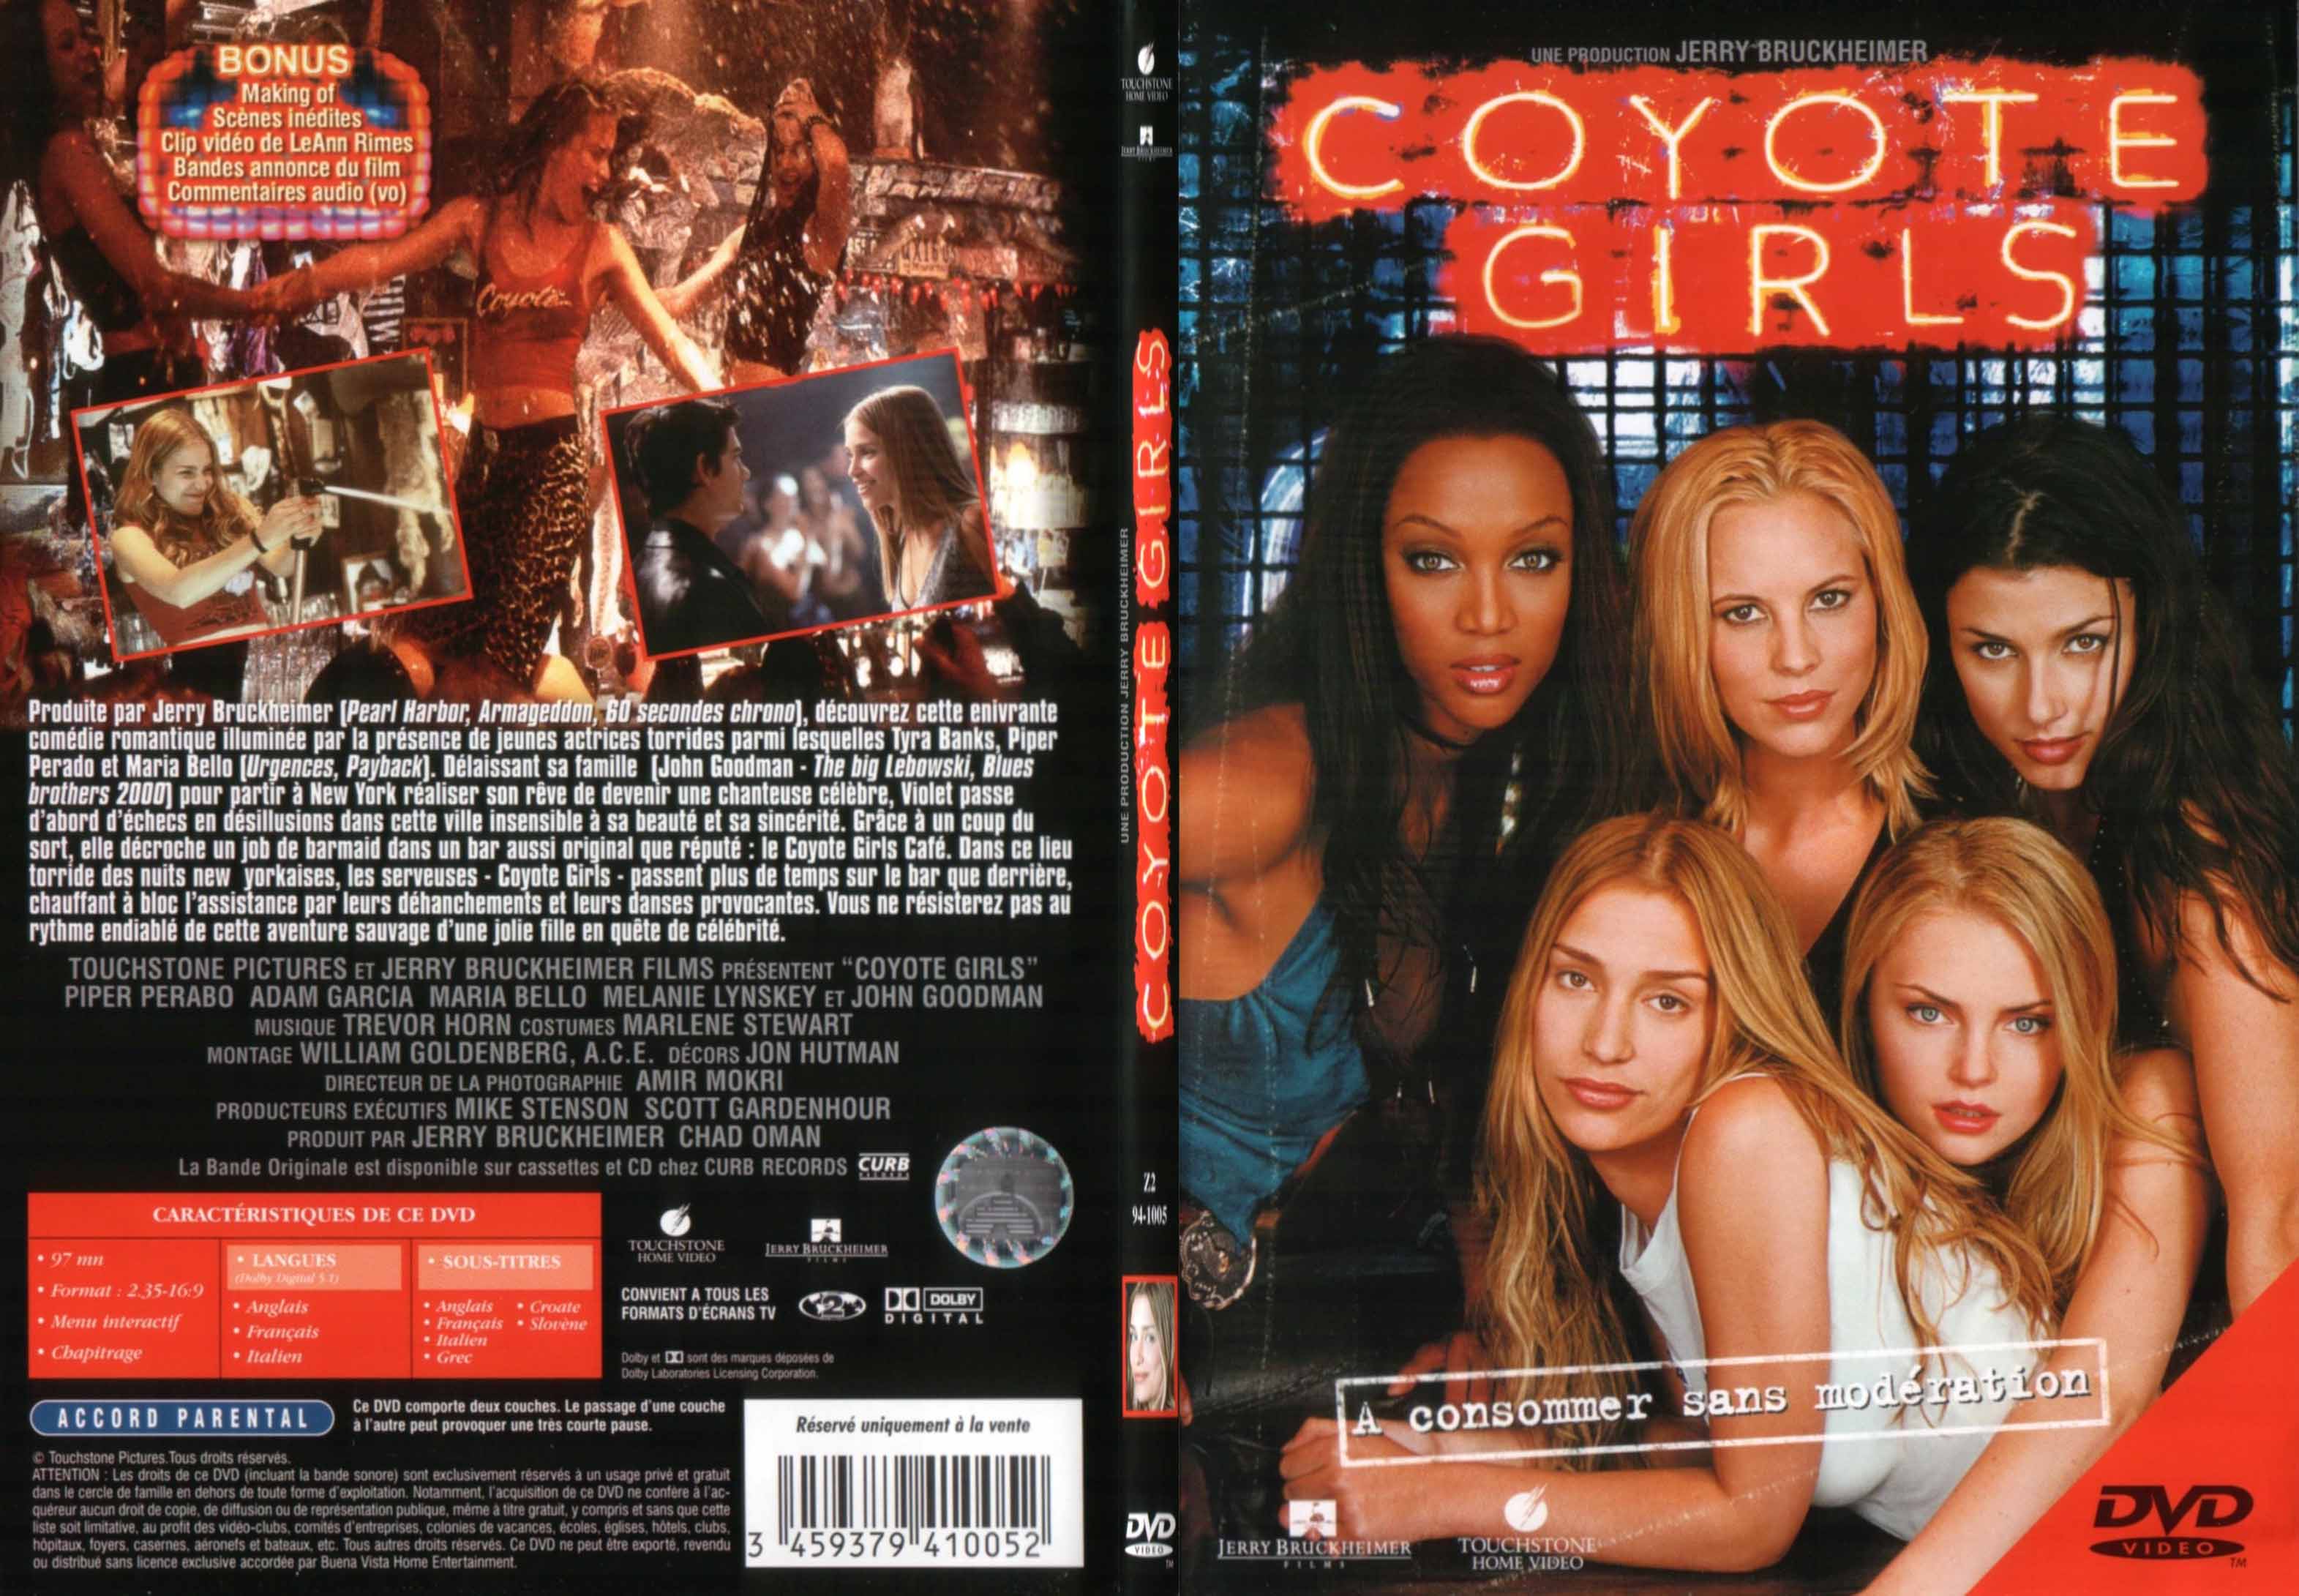 Jaquette DVD Coyote girls - SLIM